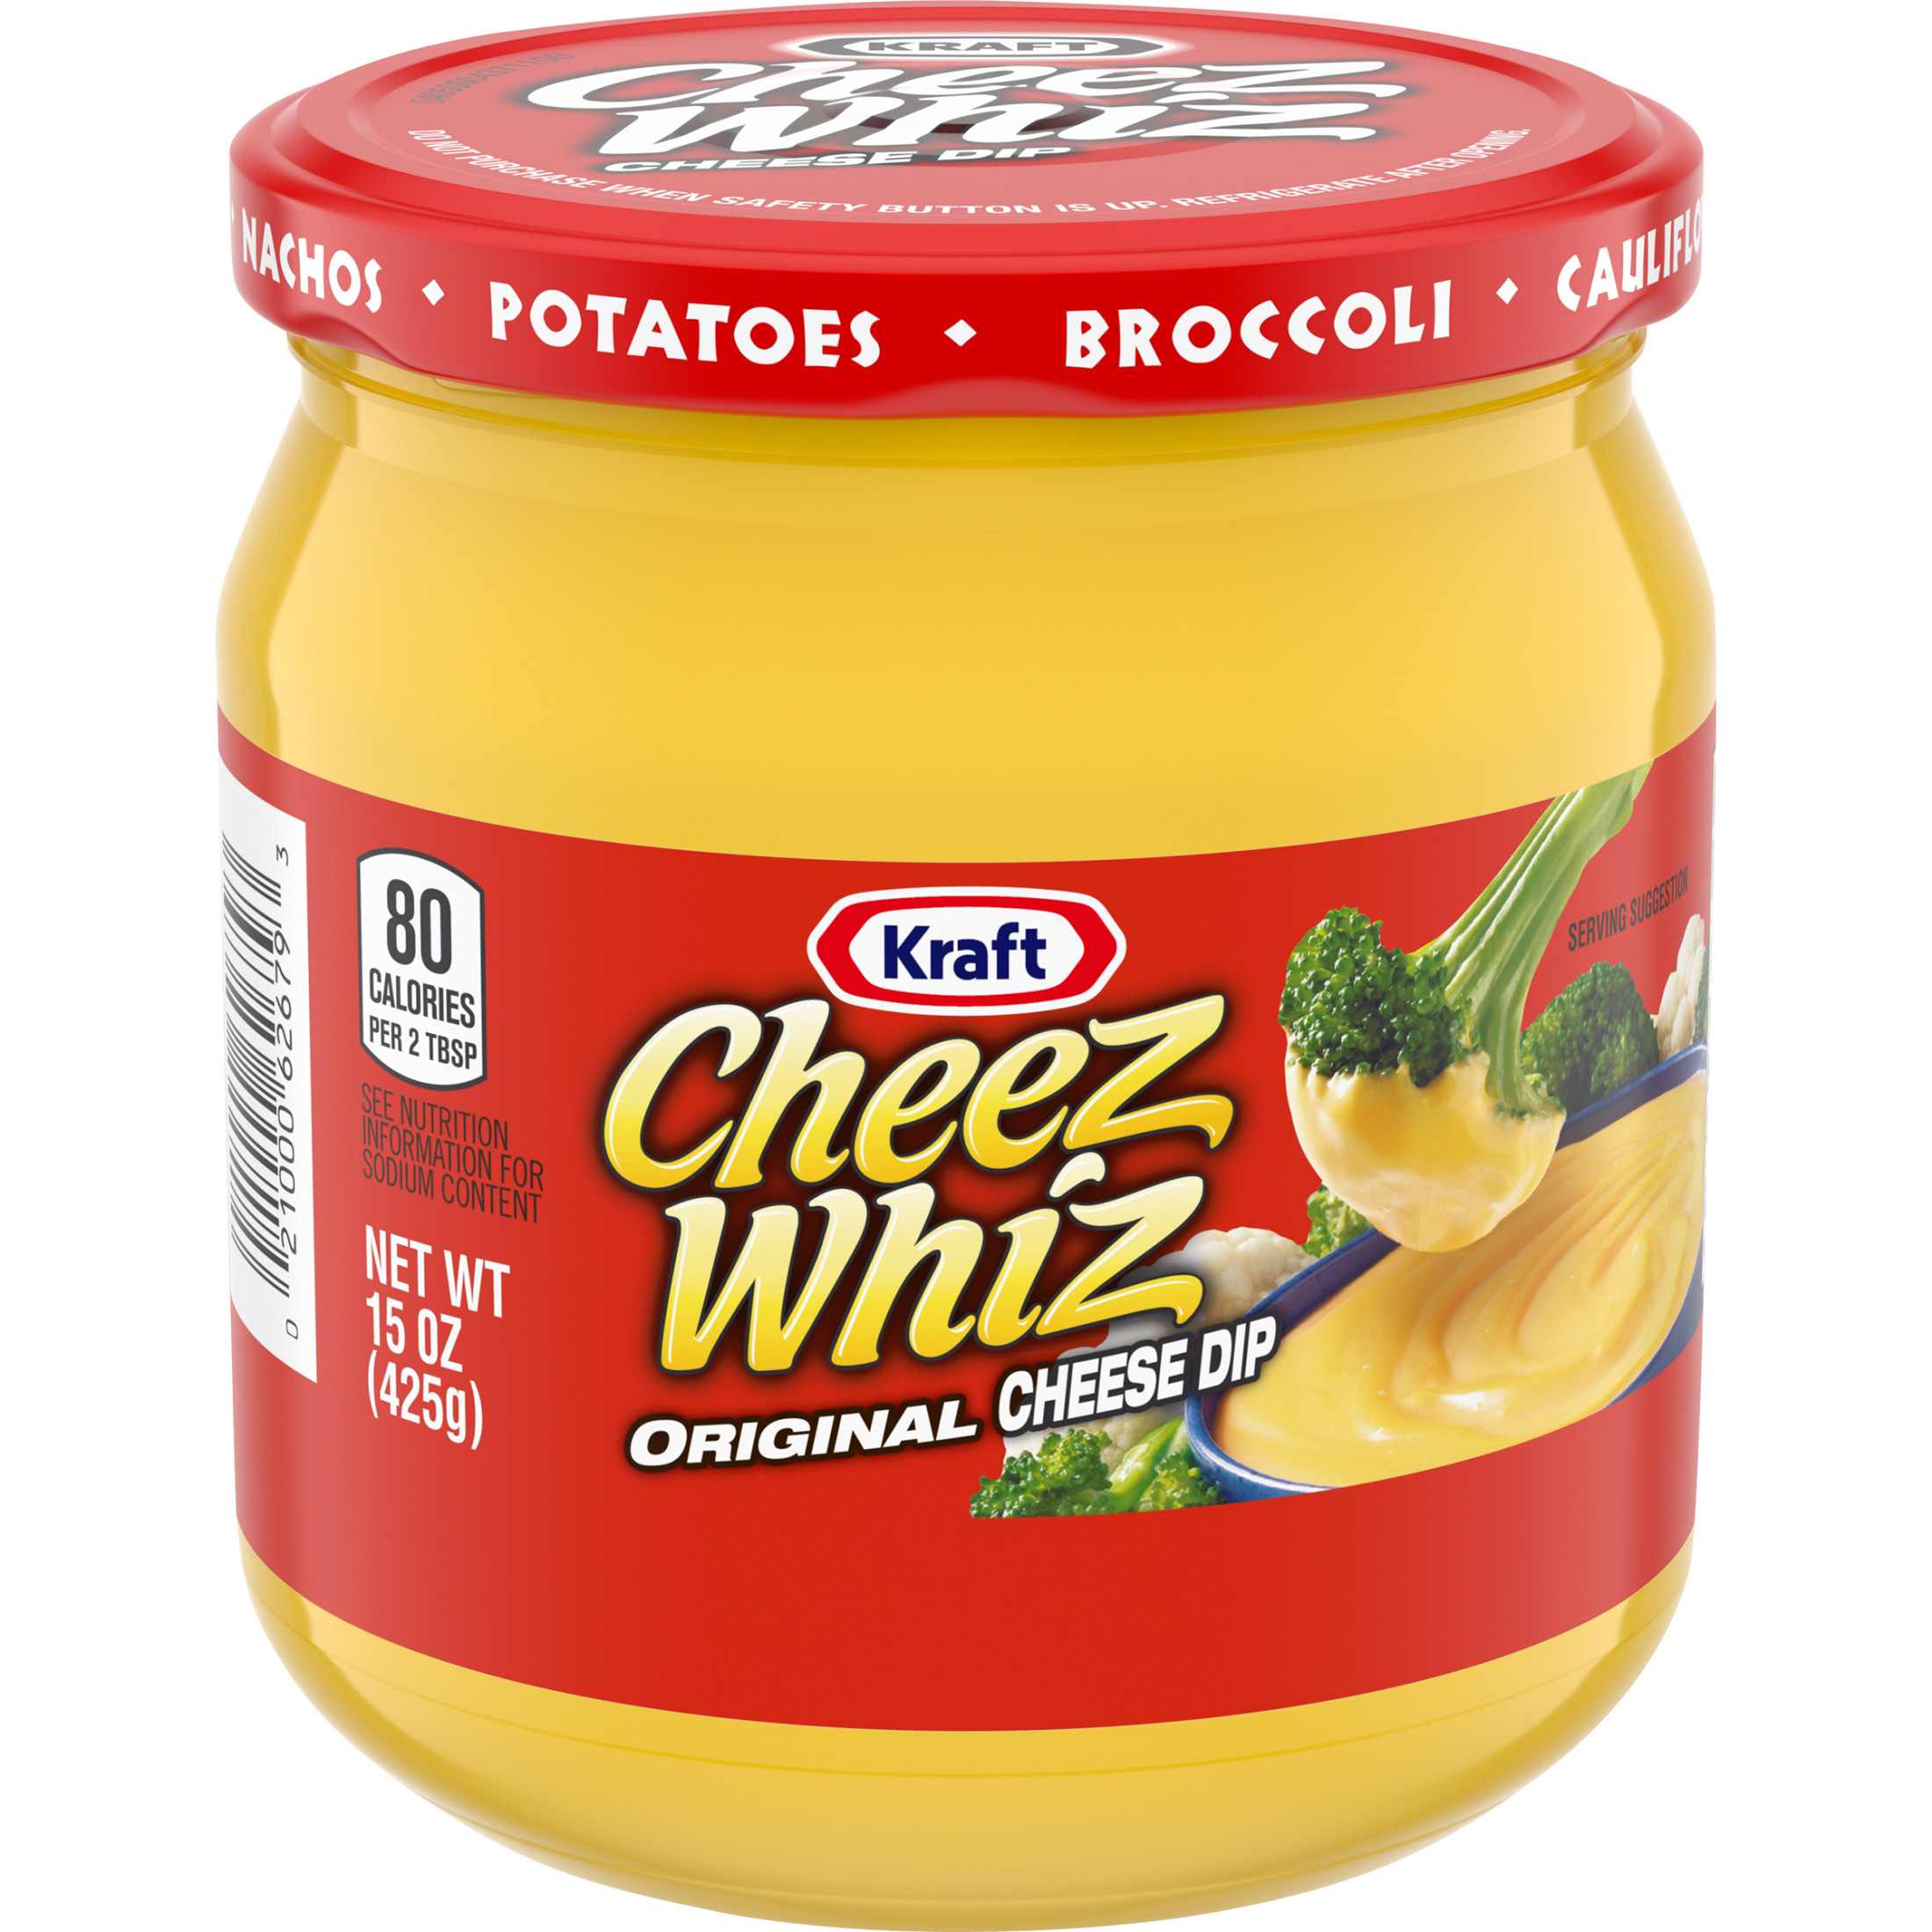 Cheez Whiz Original Cheese Dip, 15 oz Jar - image 1 of 9